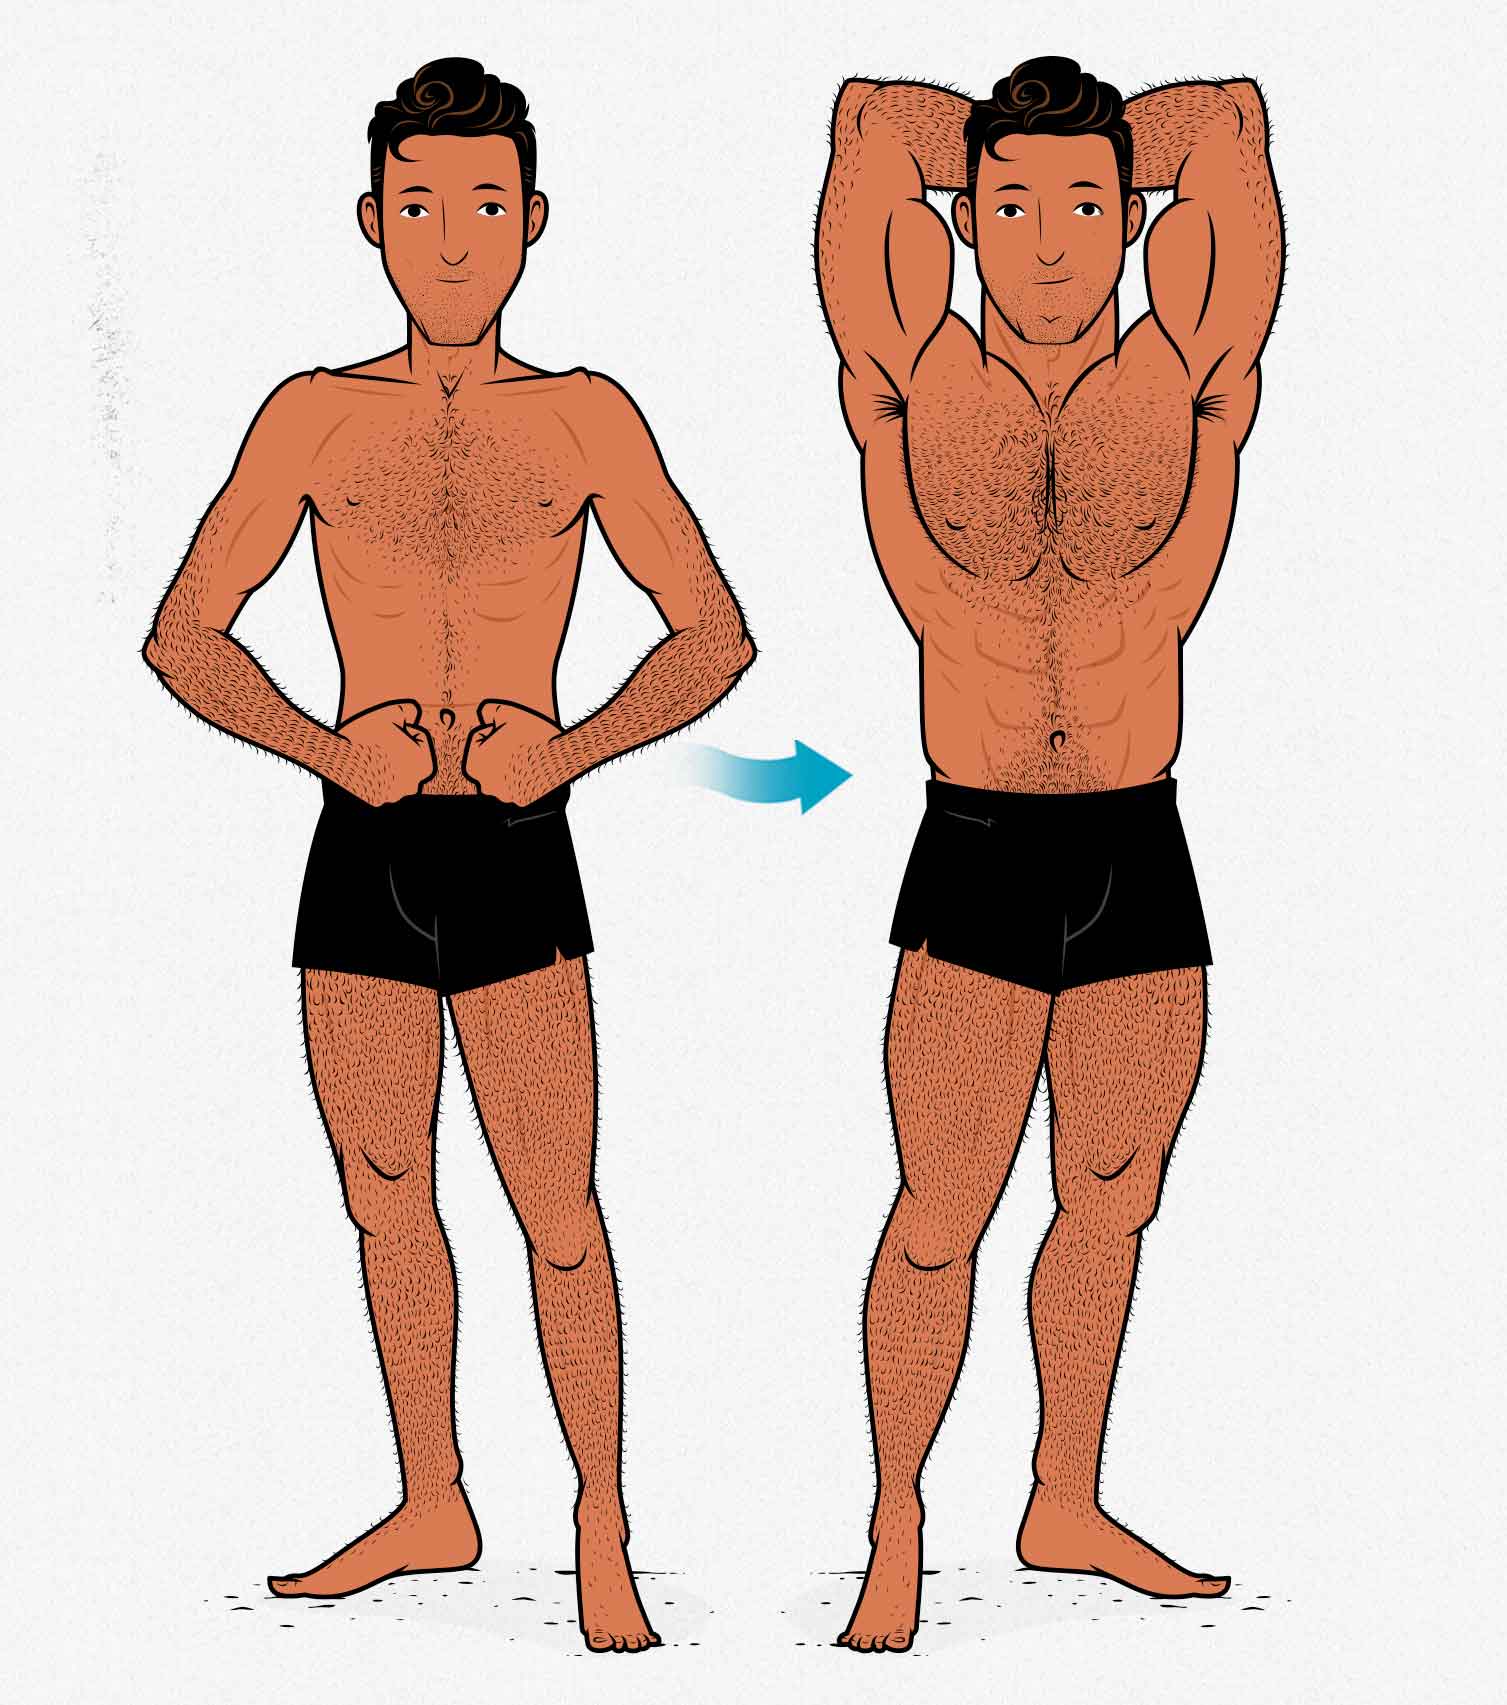 Illustration of a skinny guy bulking up.